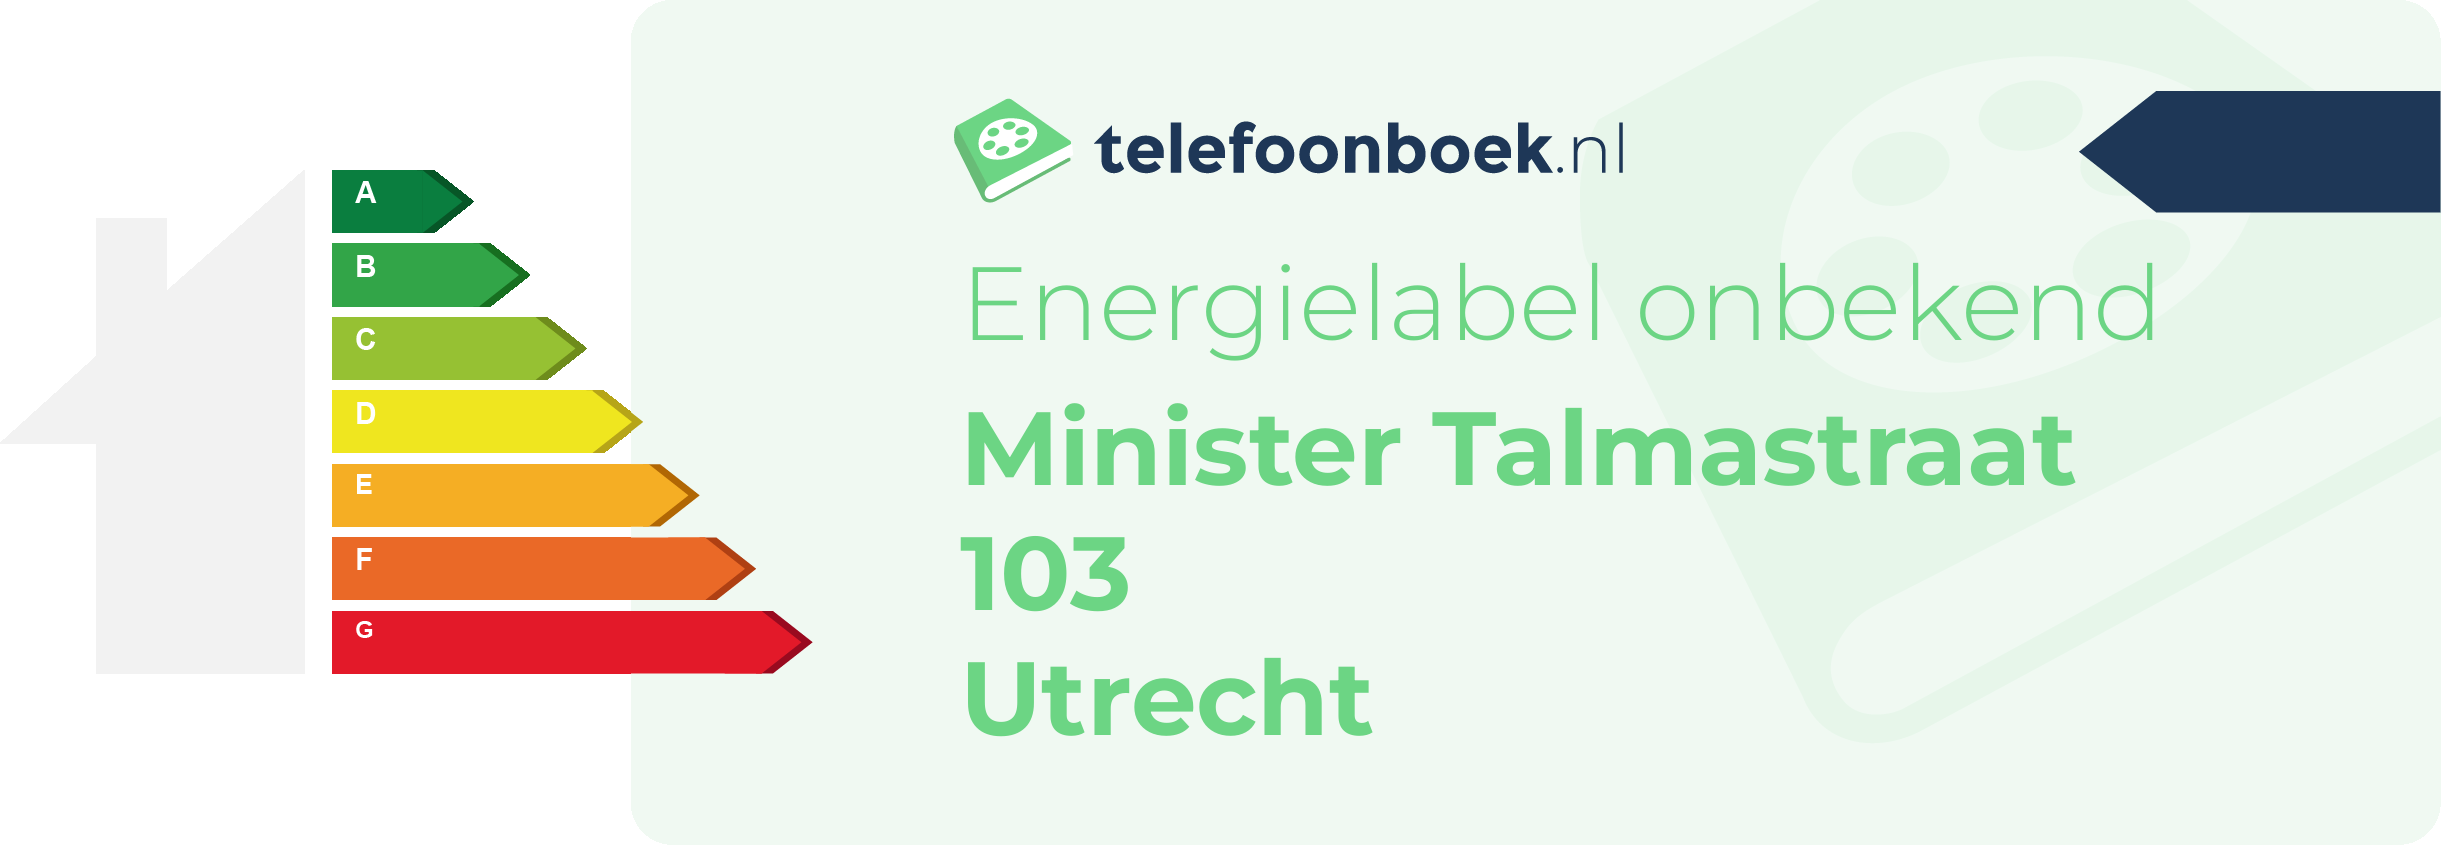 Energielabel Minister Talmastraat 103 Utrecht